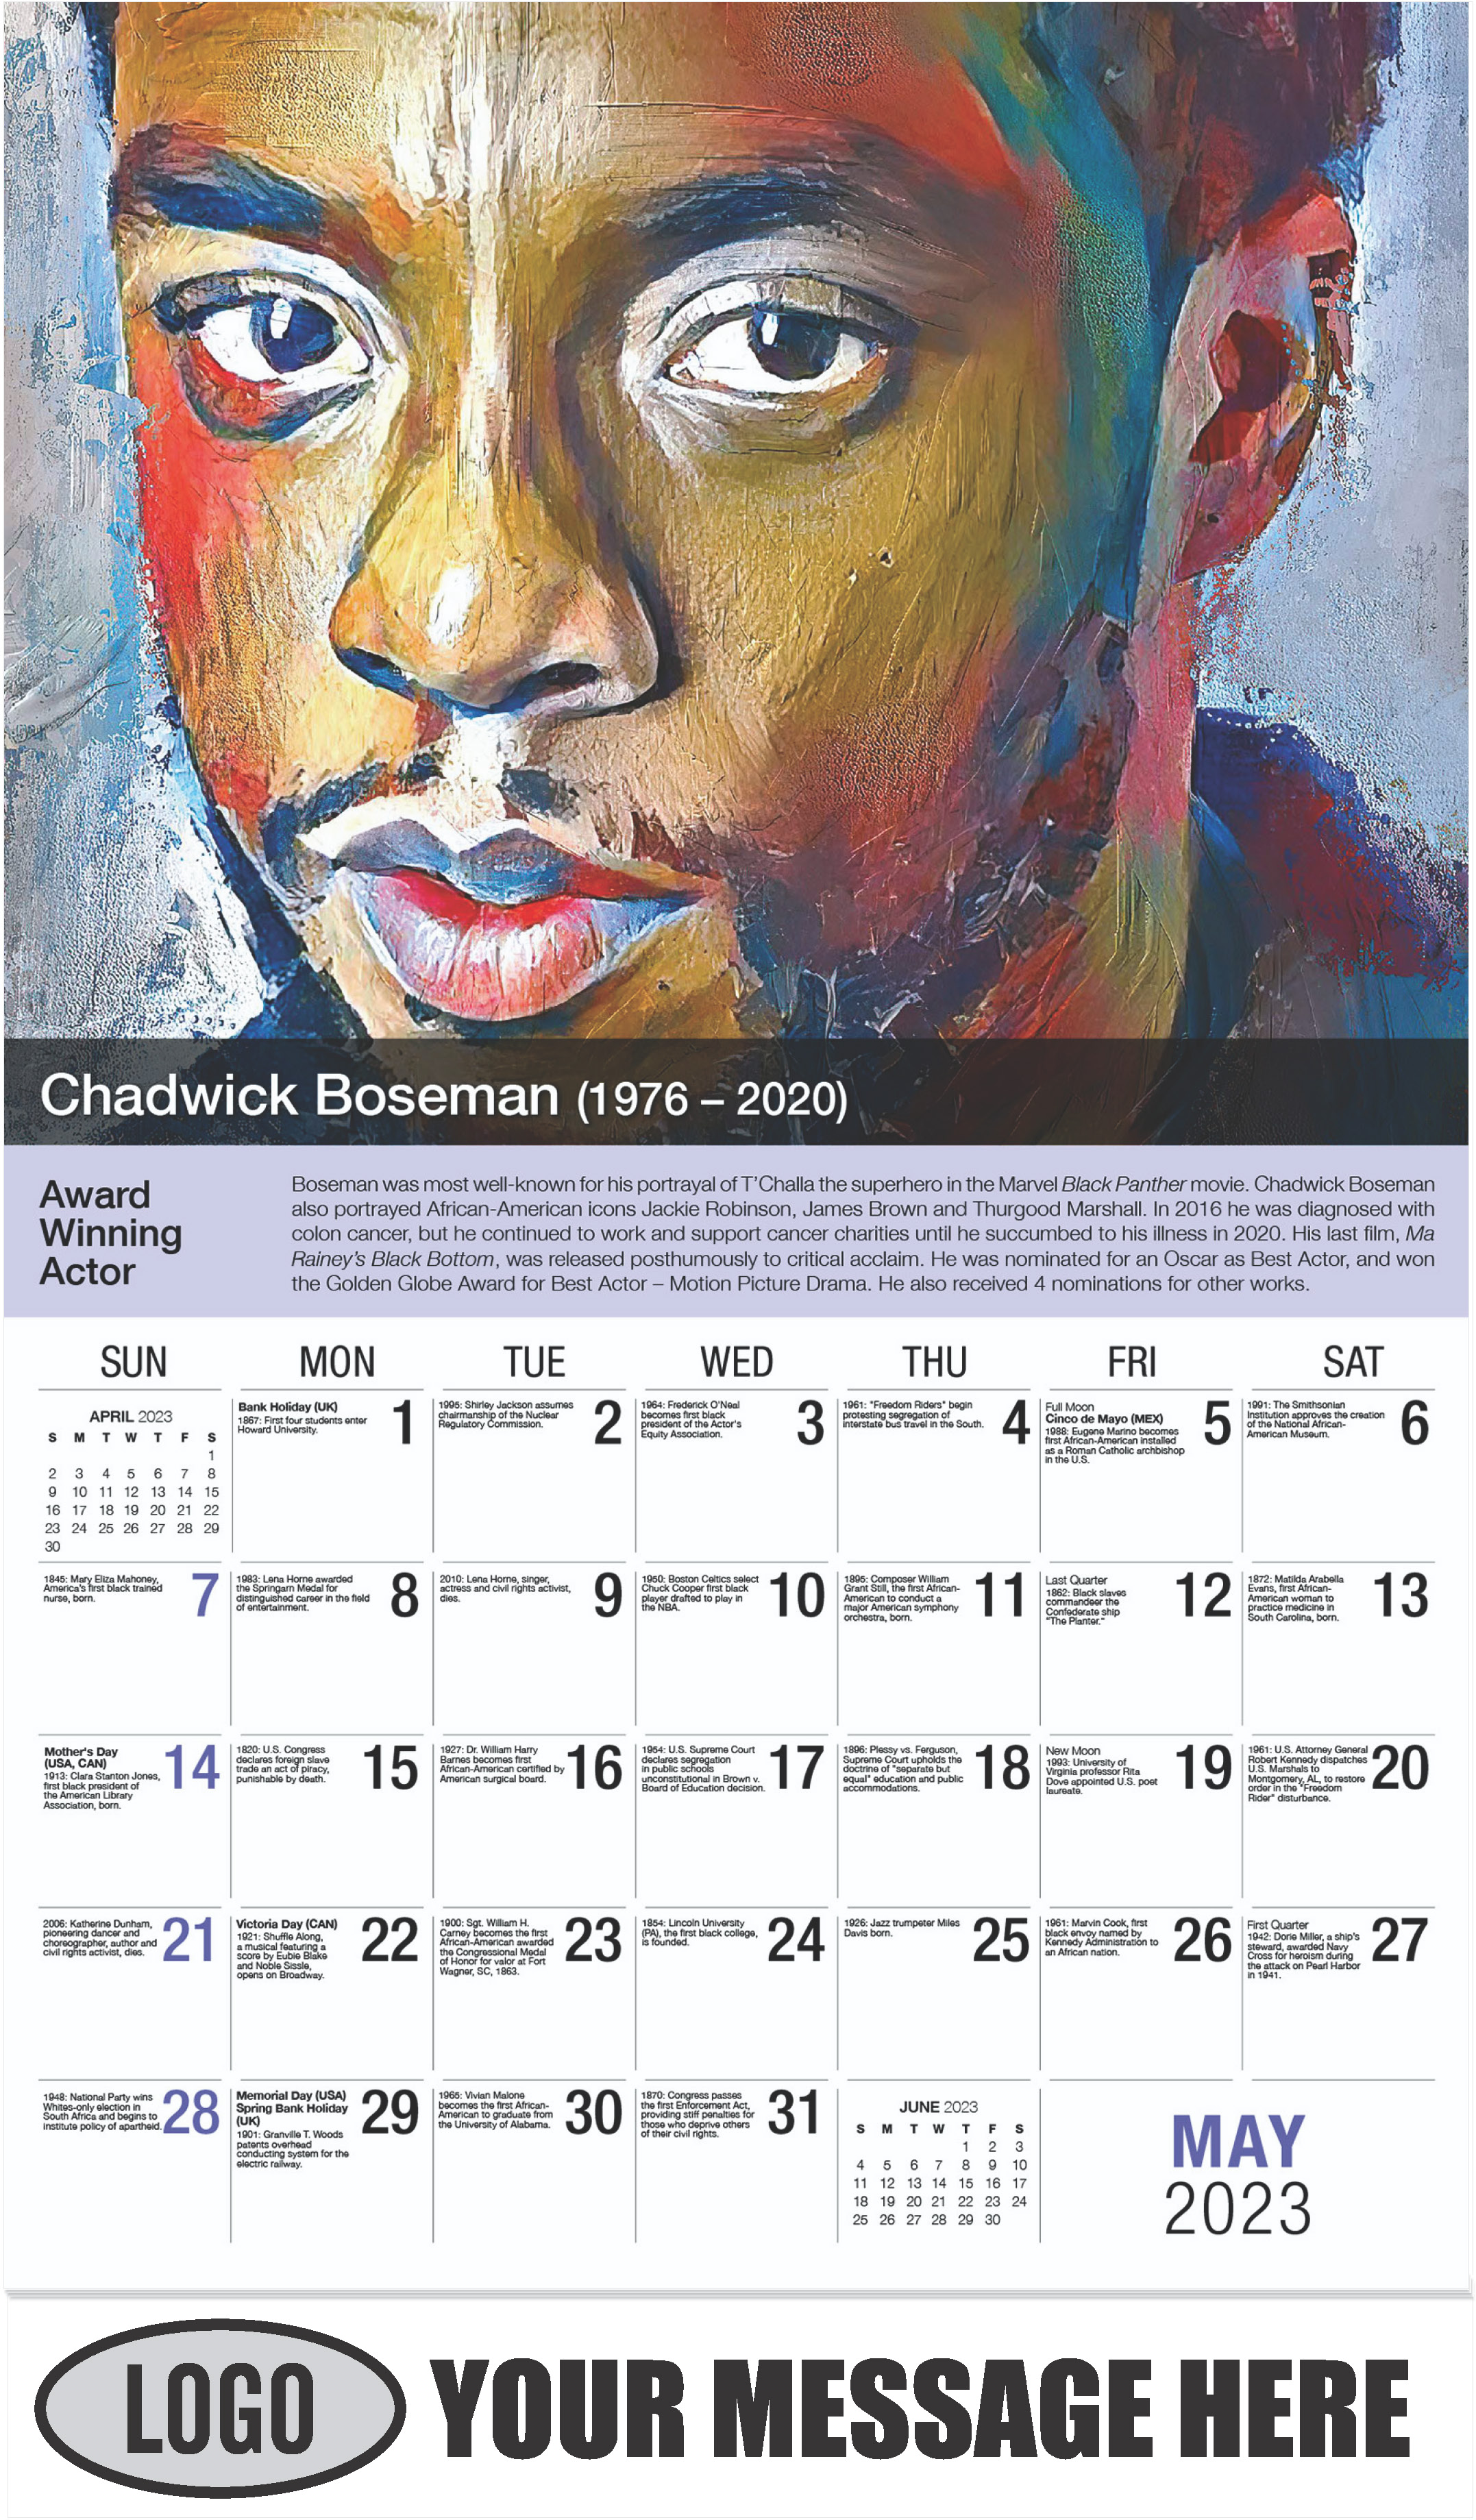 Chadwick Boseman - May - Black History 2023 Promotional Calendar